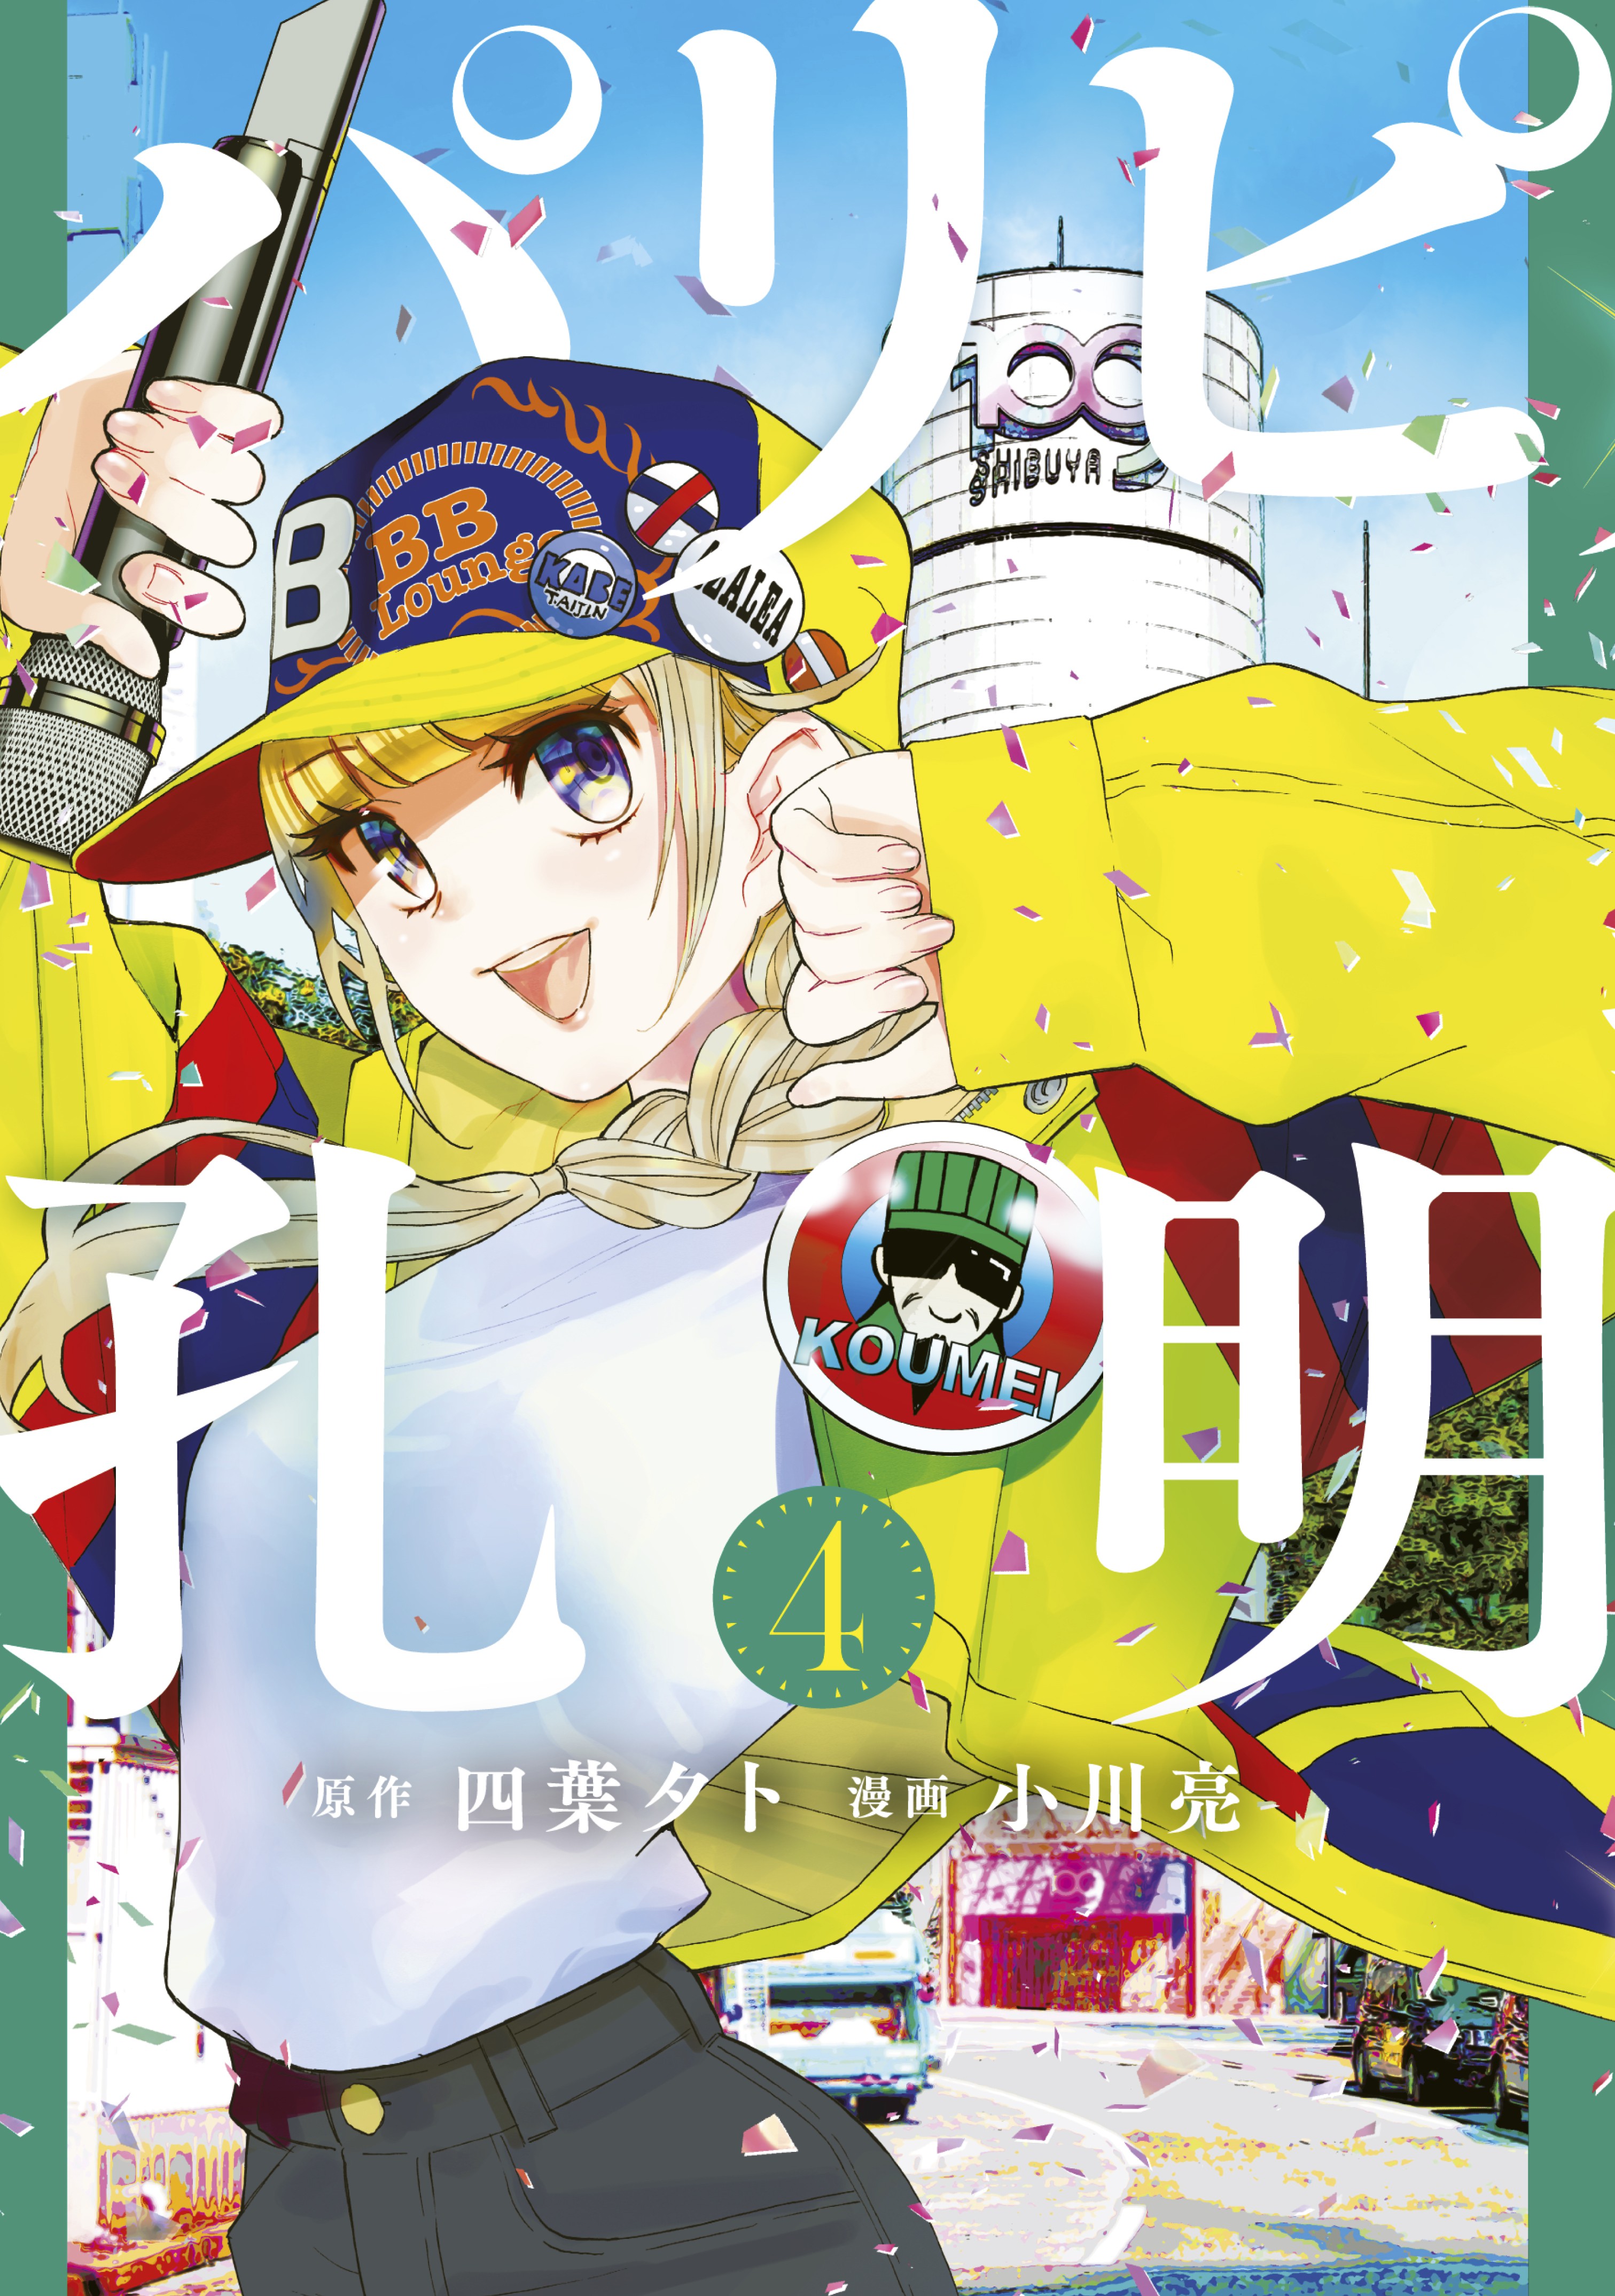 Paripi Koumei 11 comic manga anime Ryo Ogawa Party People Japanese Book